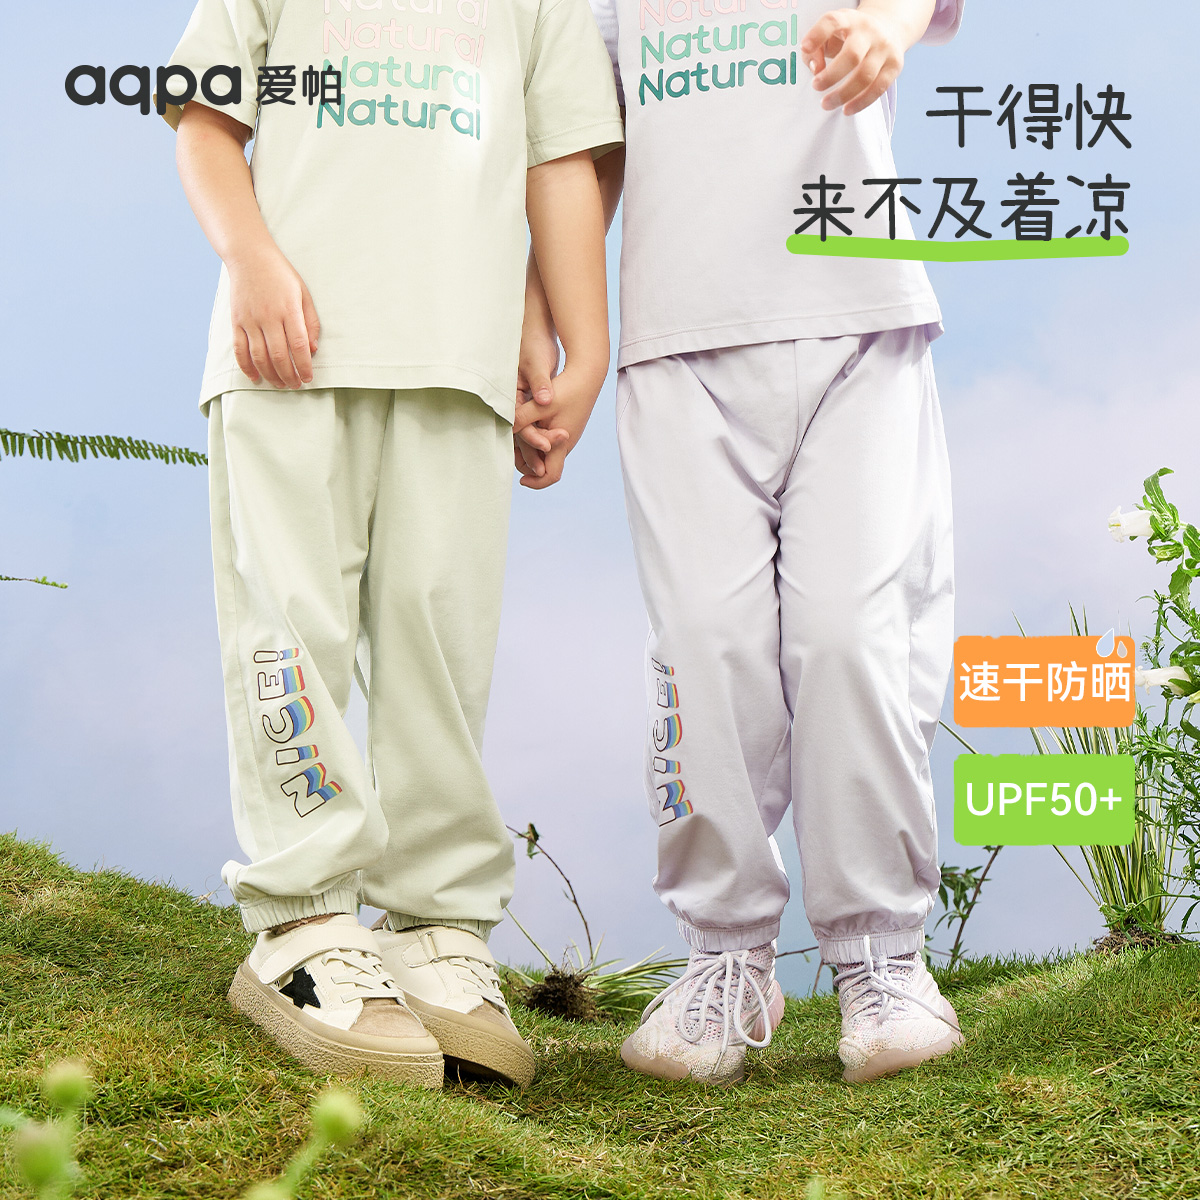 aqpa 儿童裤子防蚊裤夏季薄款运动裤UPF50+防晒婴幼儿长裤 37.5元